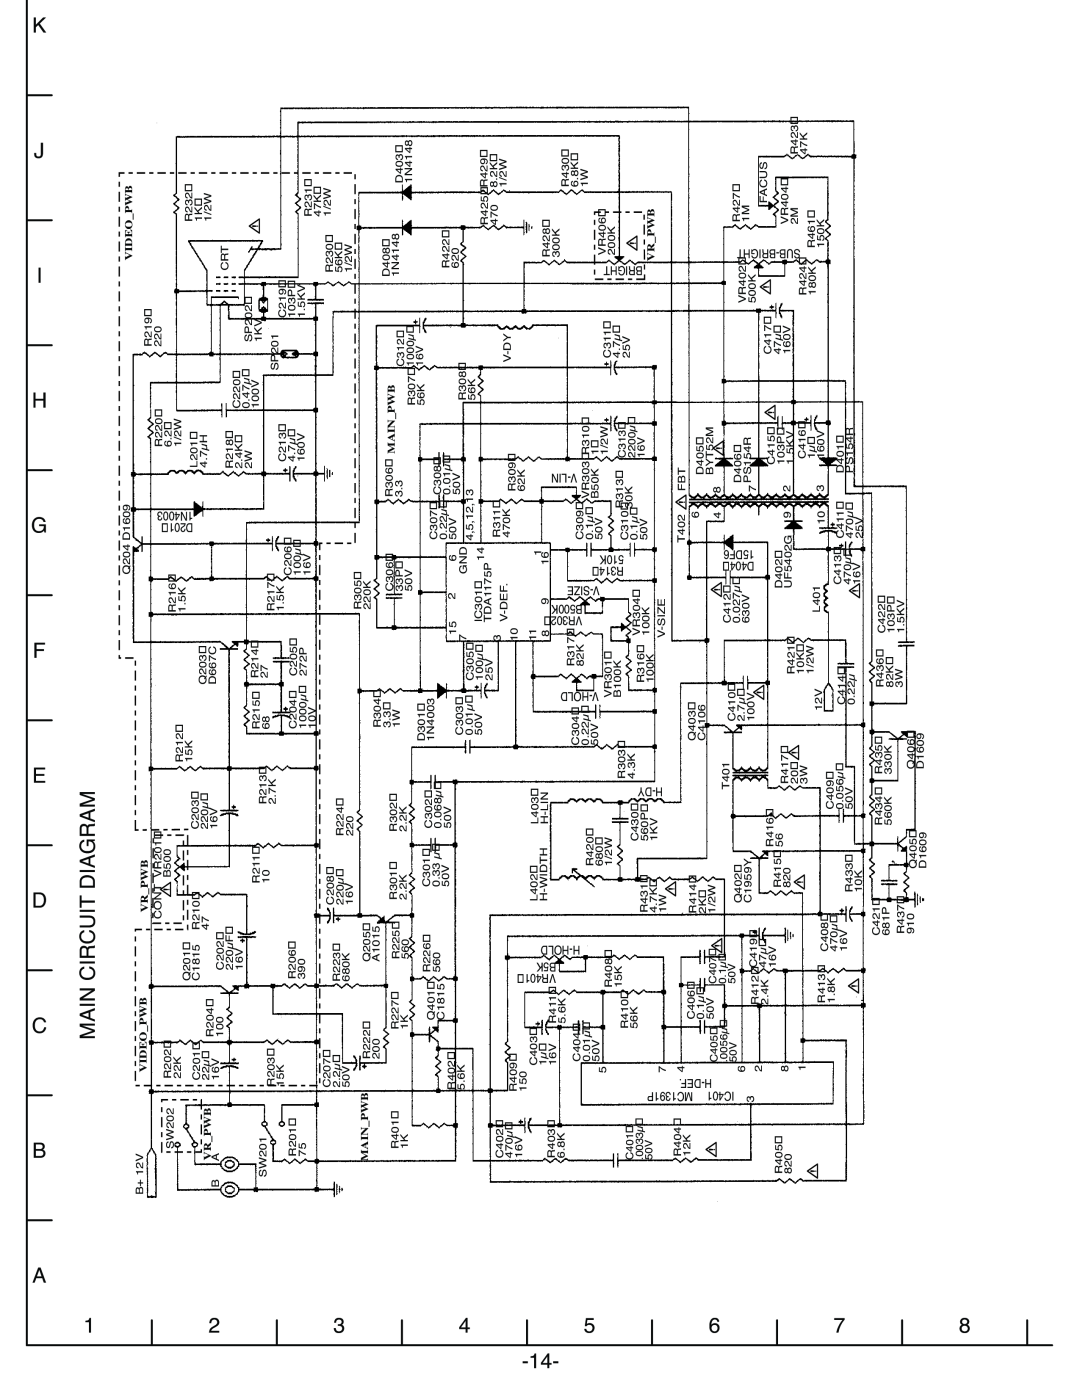 Sanyo VM-6615P, VM-6614 specifications K J I, H G F E, Diagram, Circuit, Main, Videopwb, Vr Pwb, Vrpwb A 